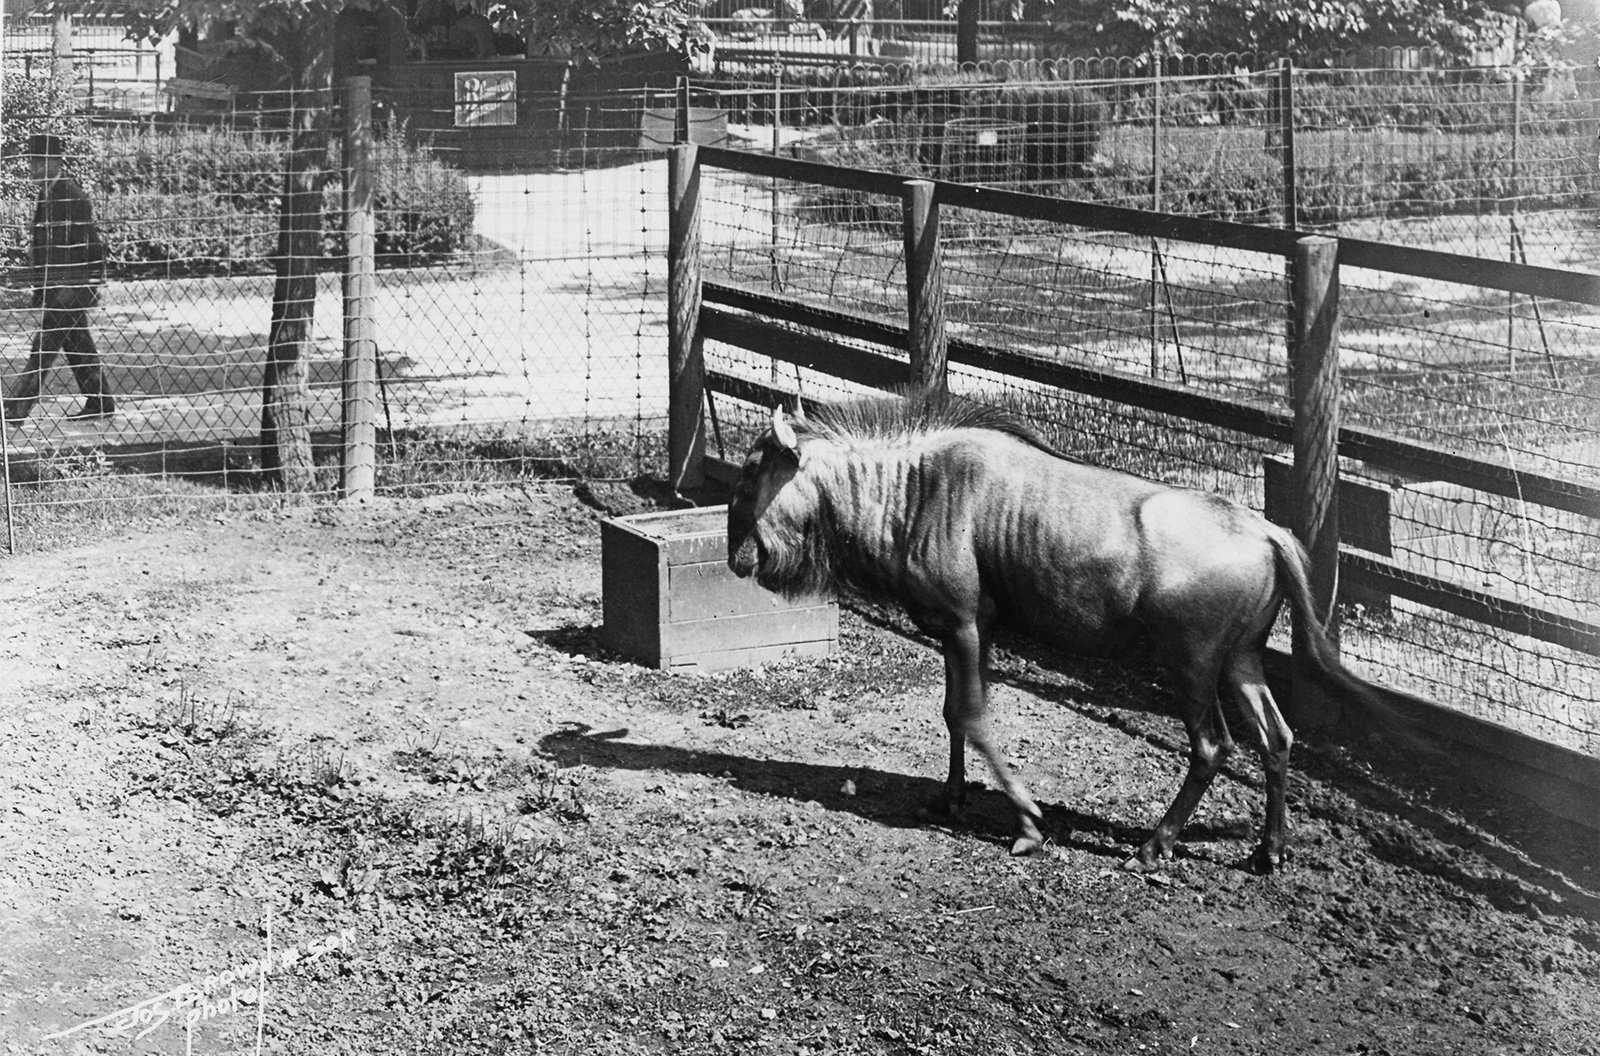 15 vintage photographs of the old Washington Park Zoo